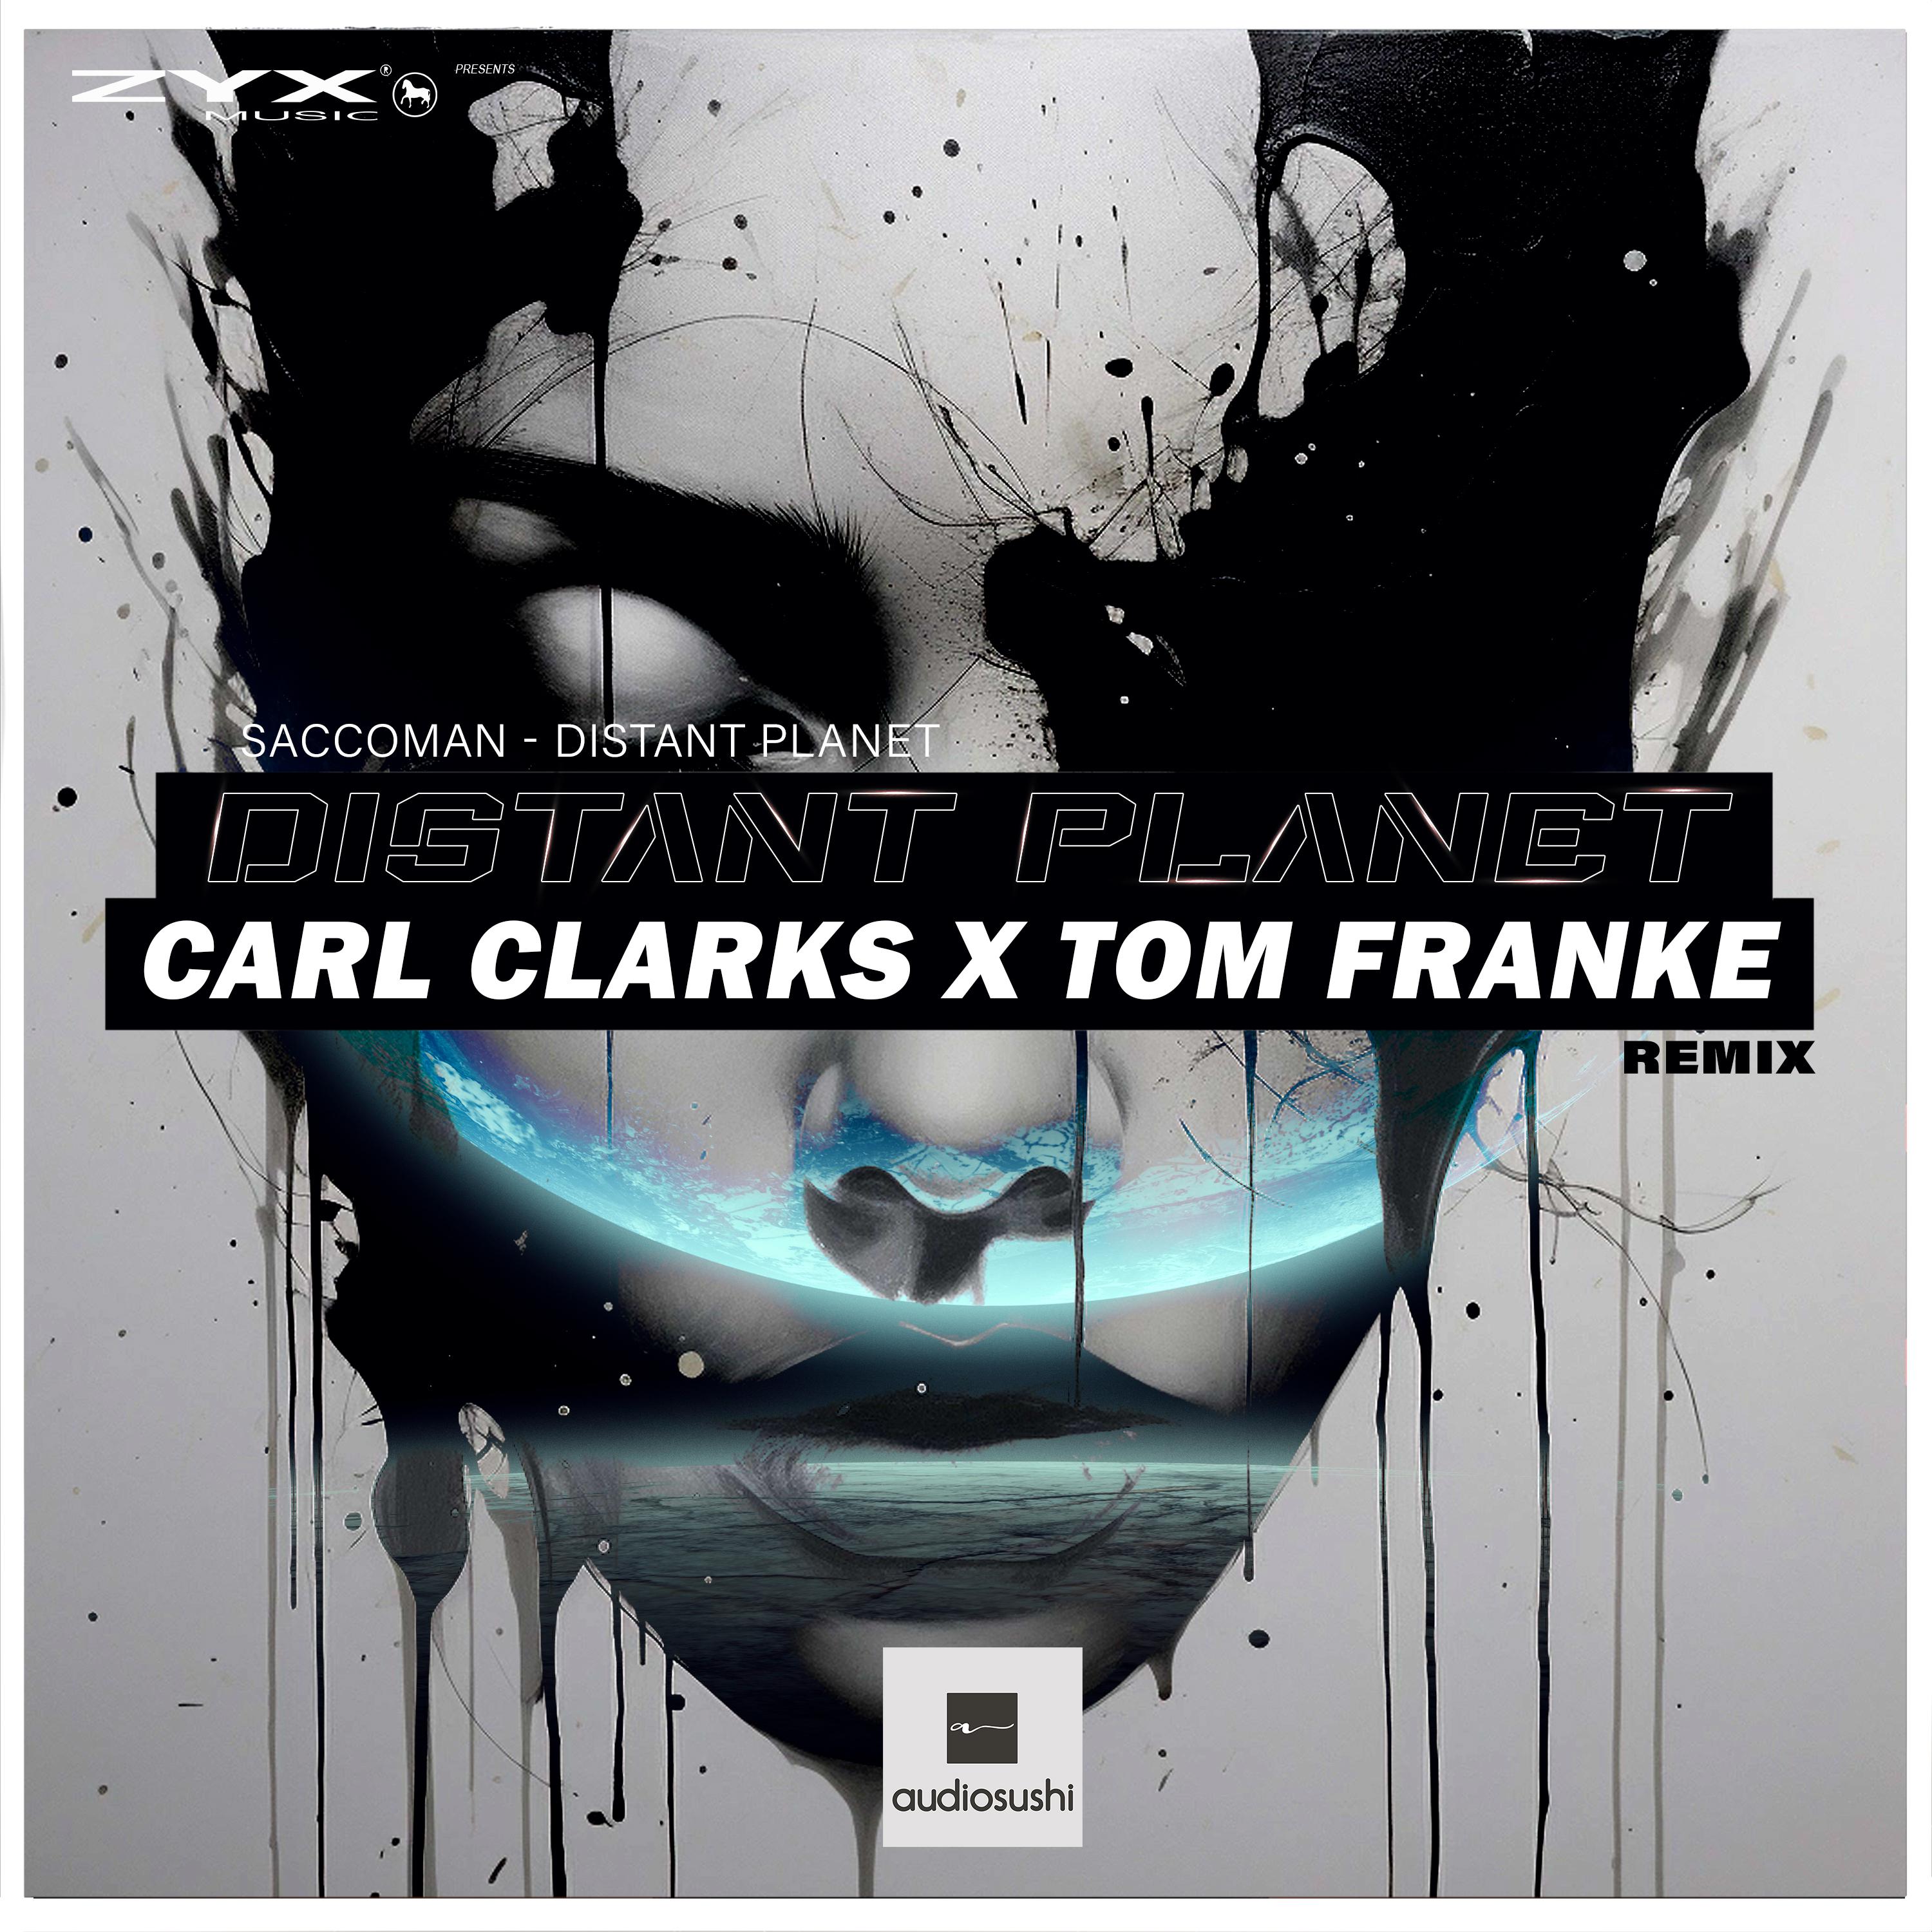 Saccoman - Distant Planet (Carl Clarks x Tom Franke Remix)